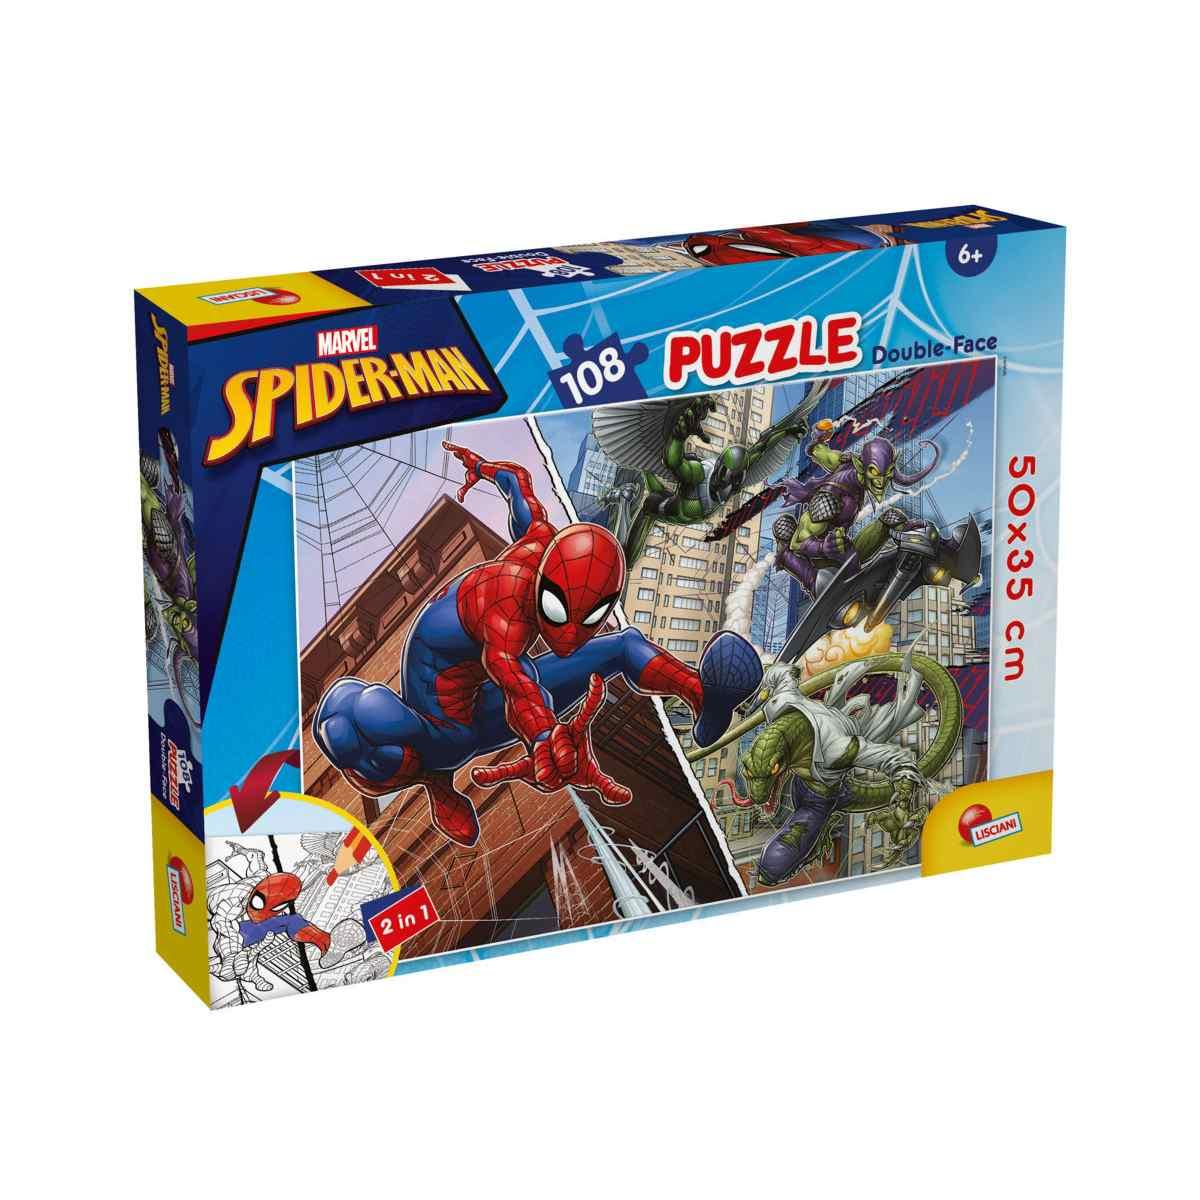 Puzzle Marvel 108 Spiderman